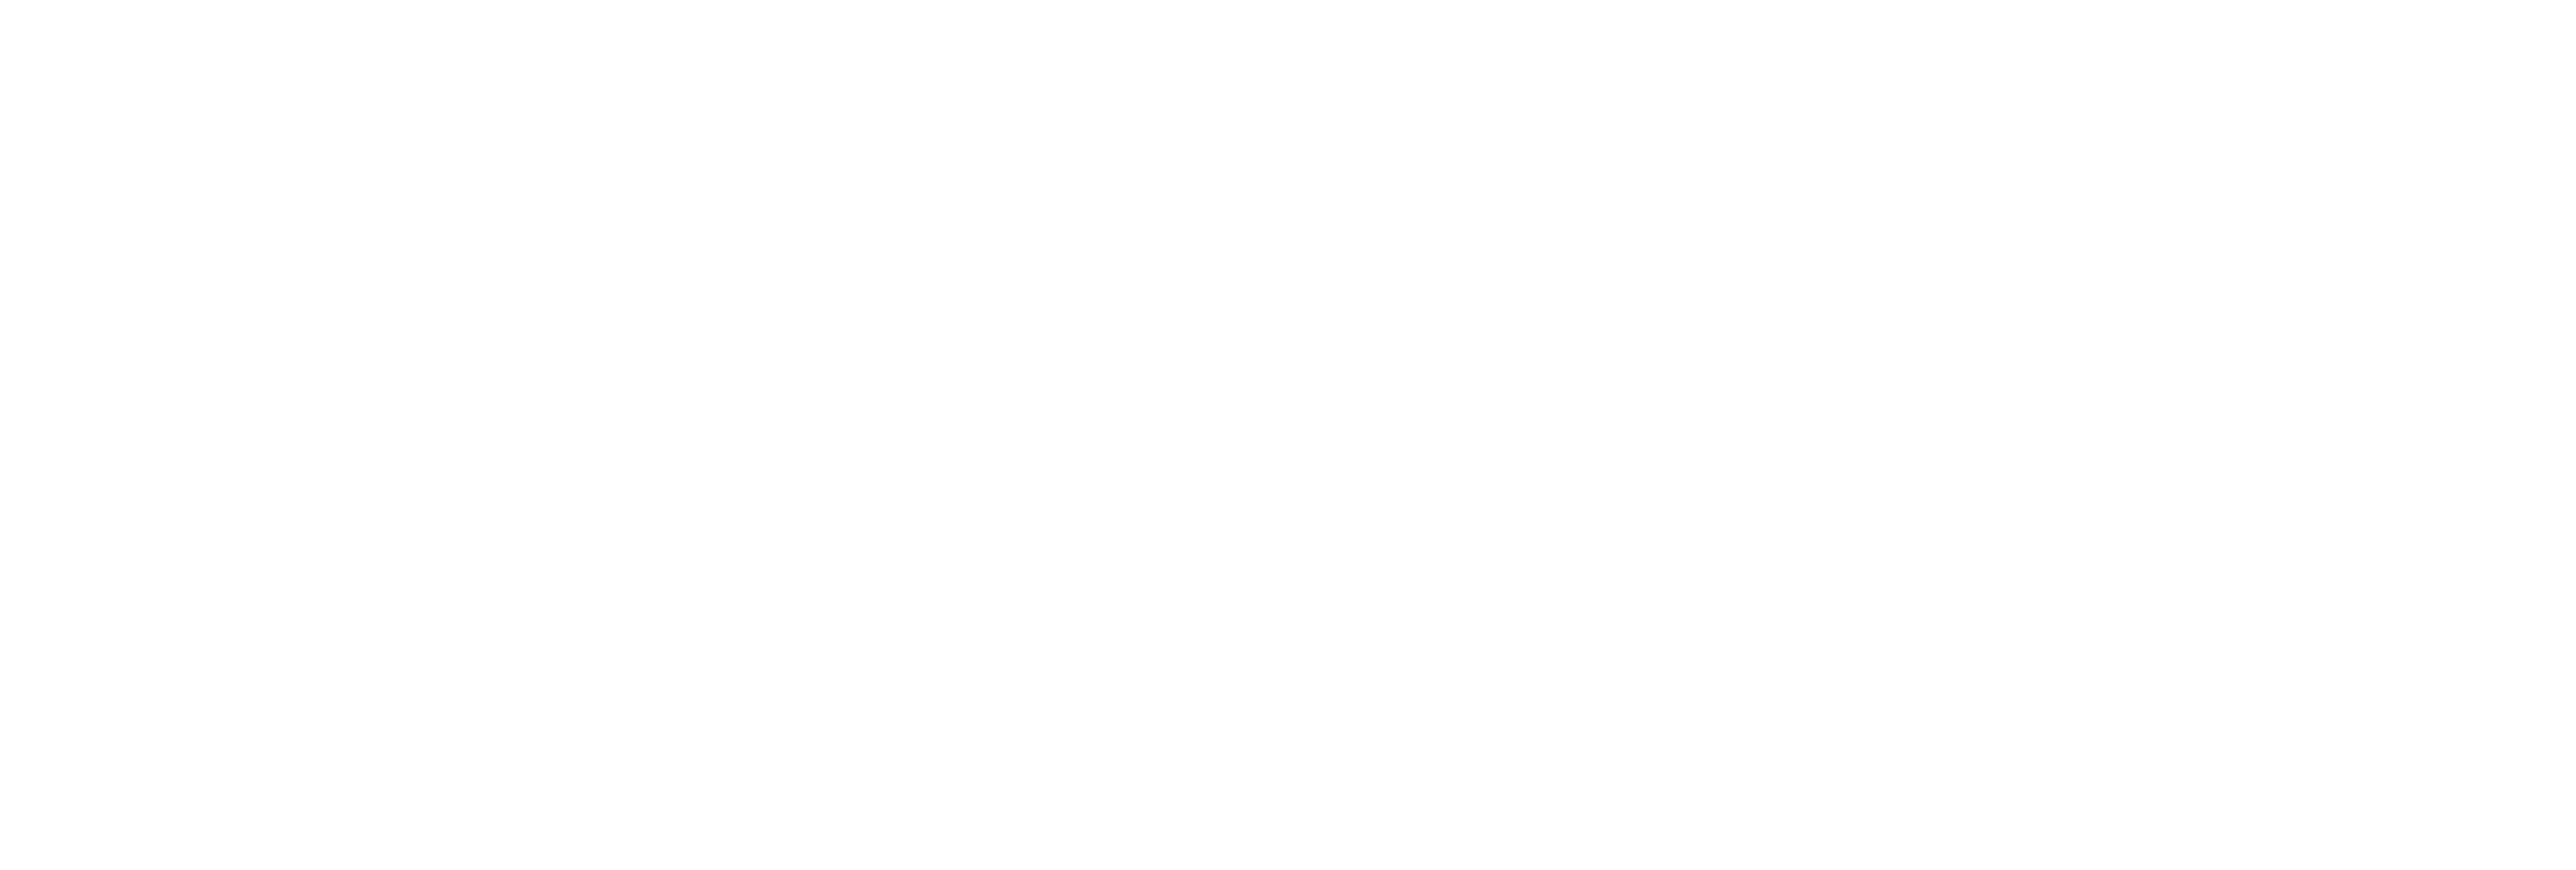 AniCura Familiedyrlægerne Aars logo